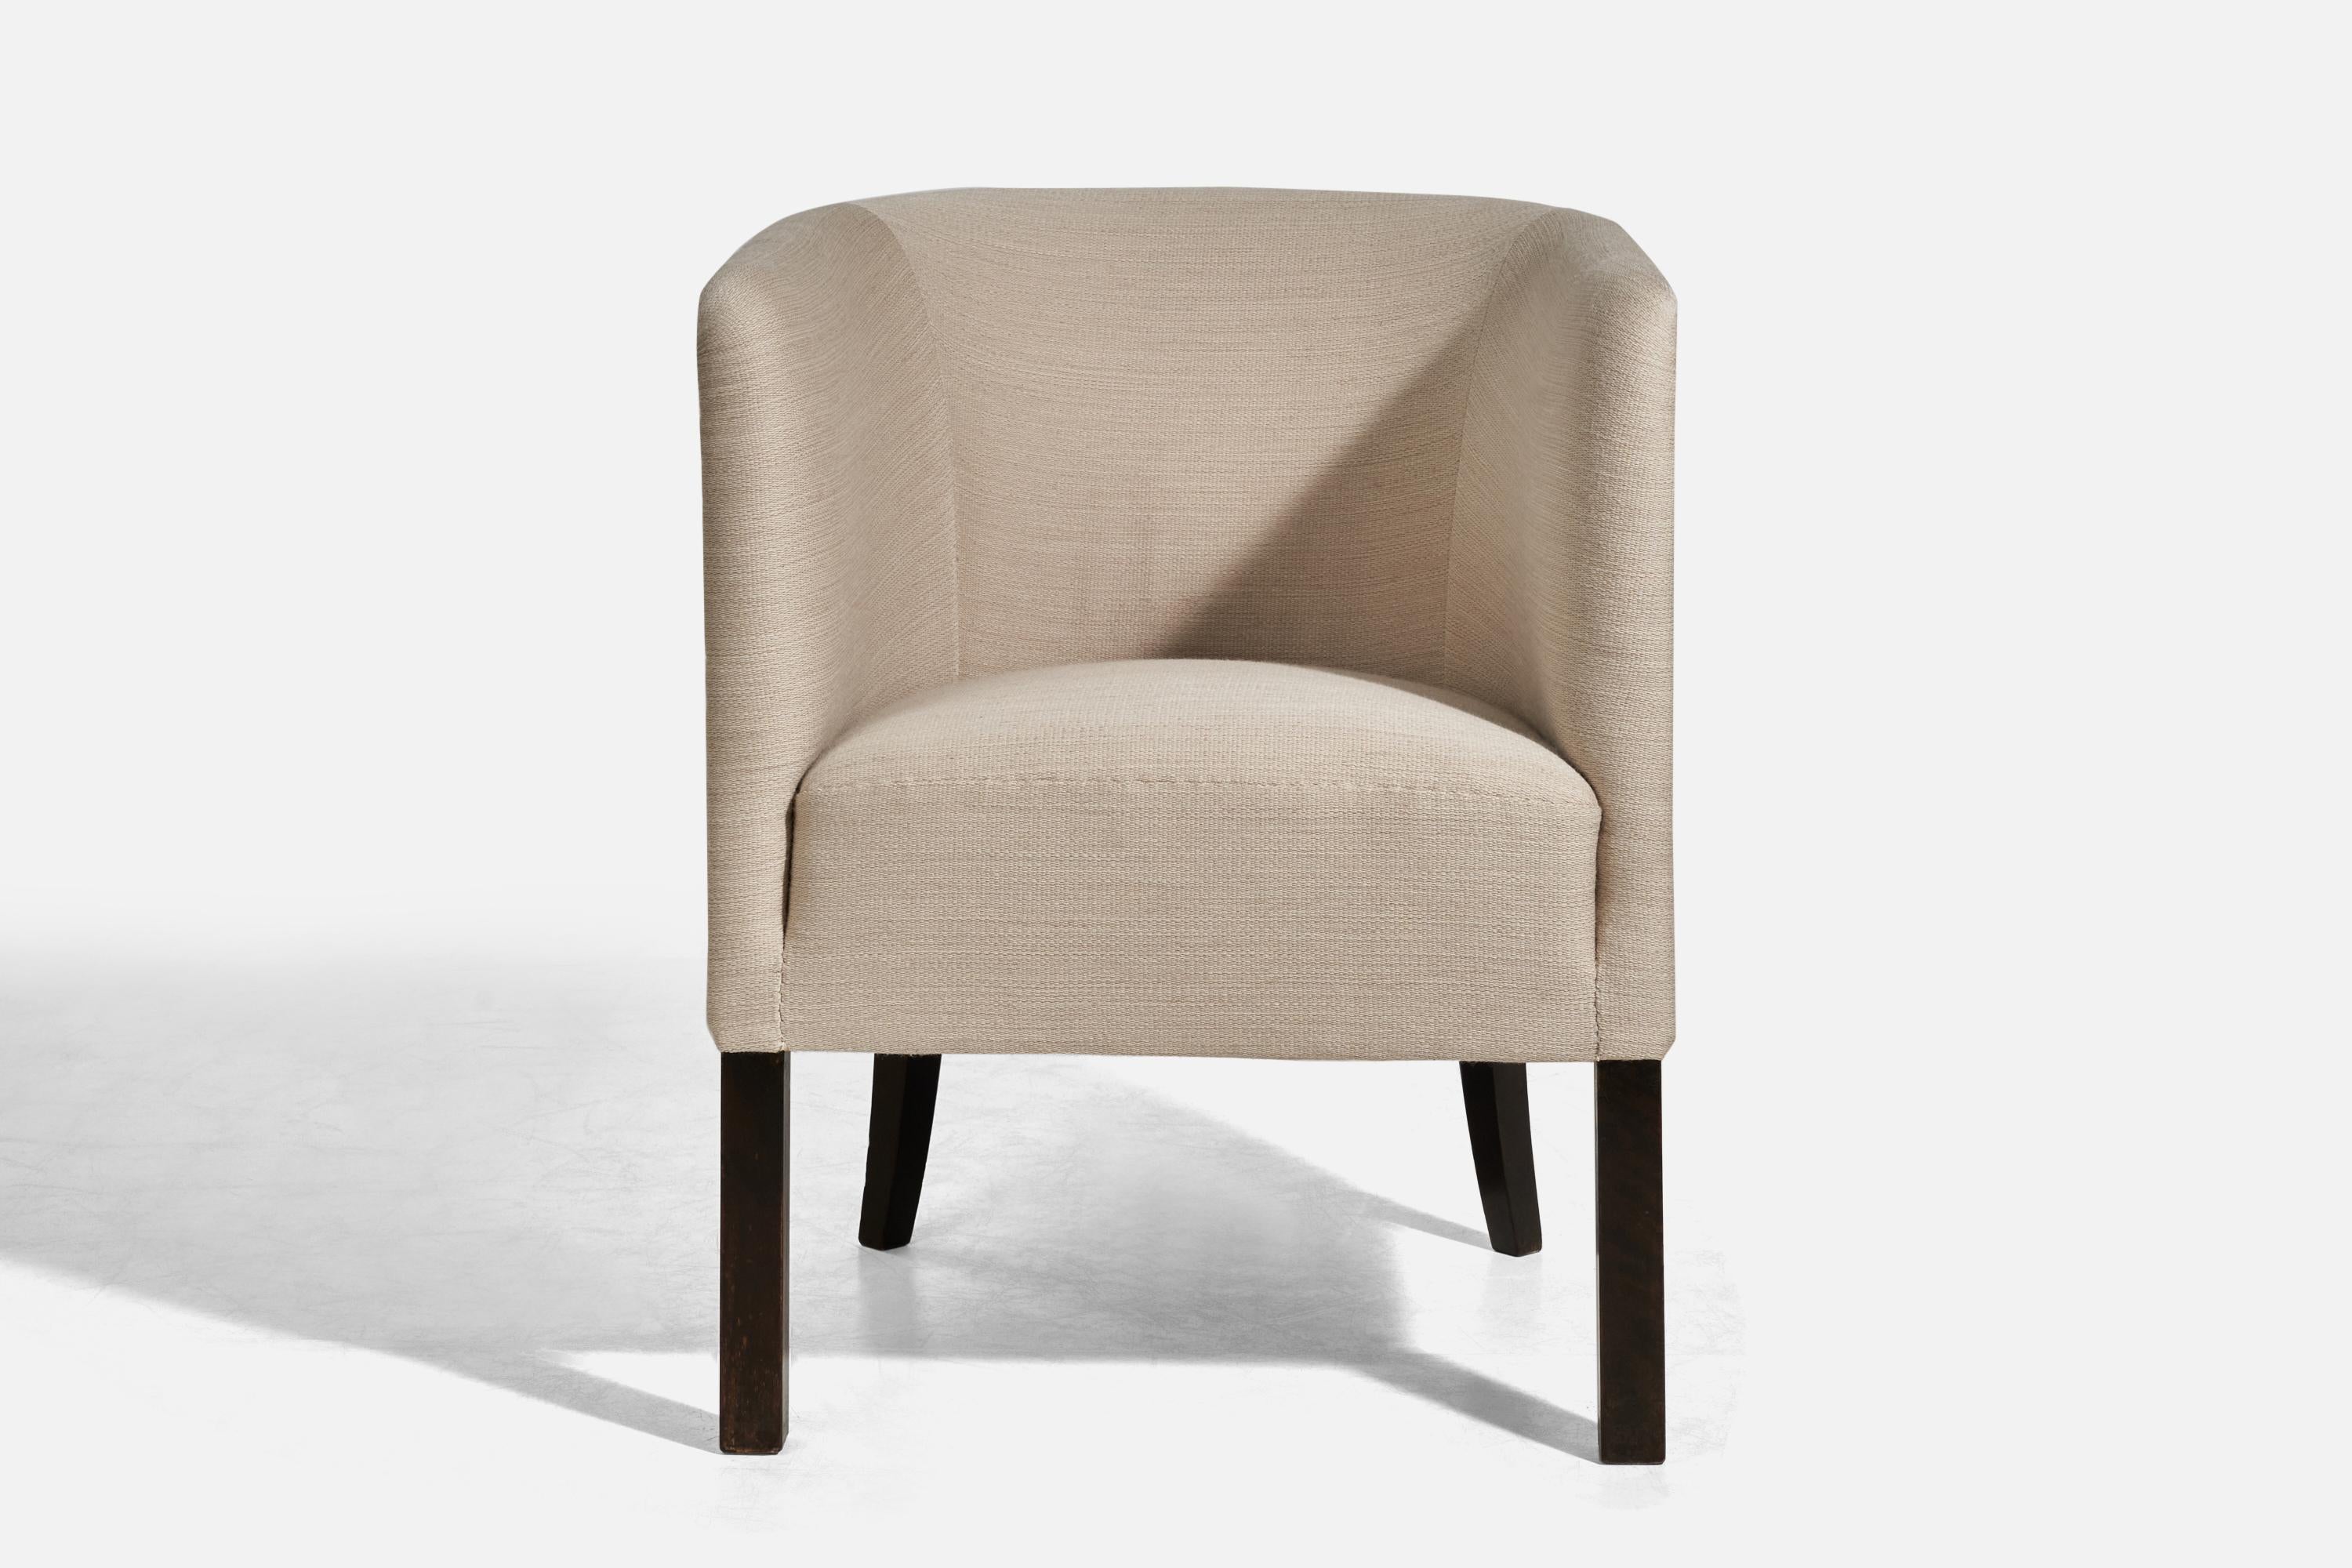 Axel Einar Hjorth, Typenco Club Chairs, Fabric, Birch, Nordiska Kompaniet, 1932 For Sale 1